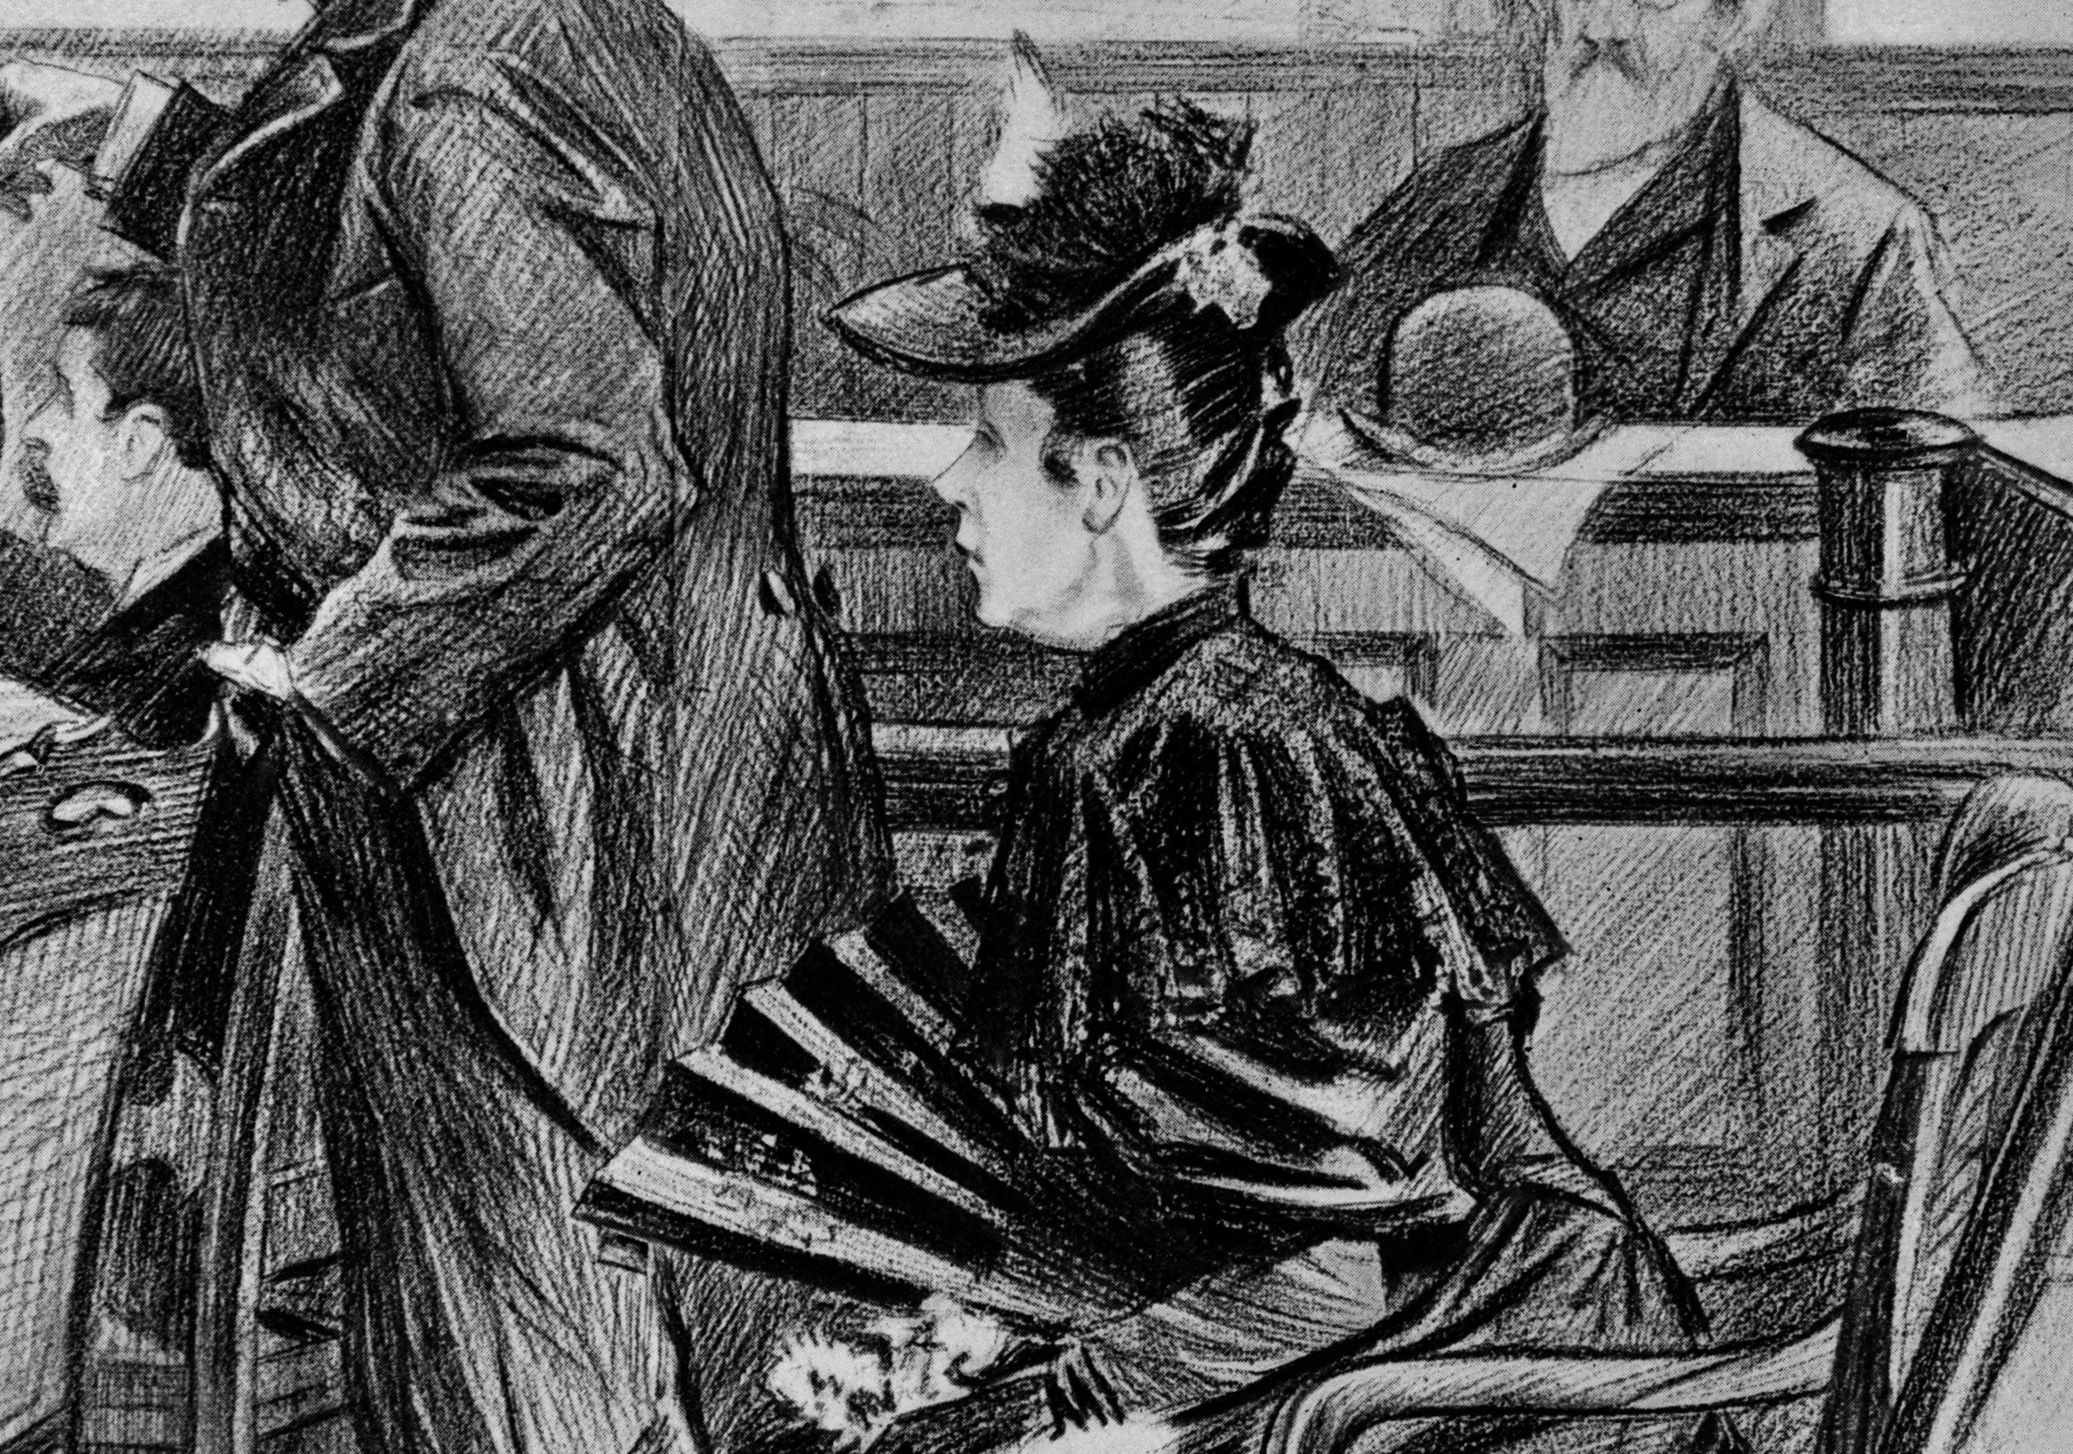 Lizzie Borden: America's Most Famous Female Axe Murderer?